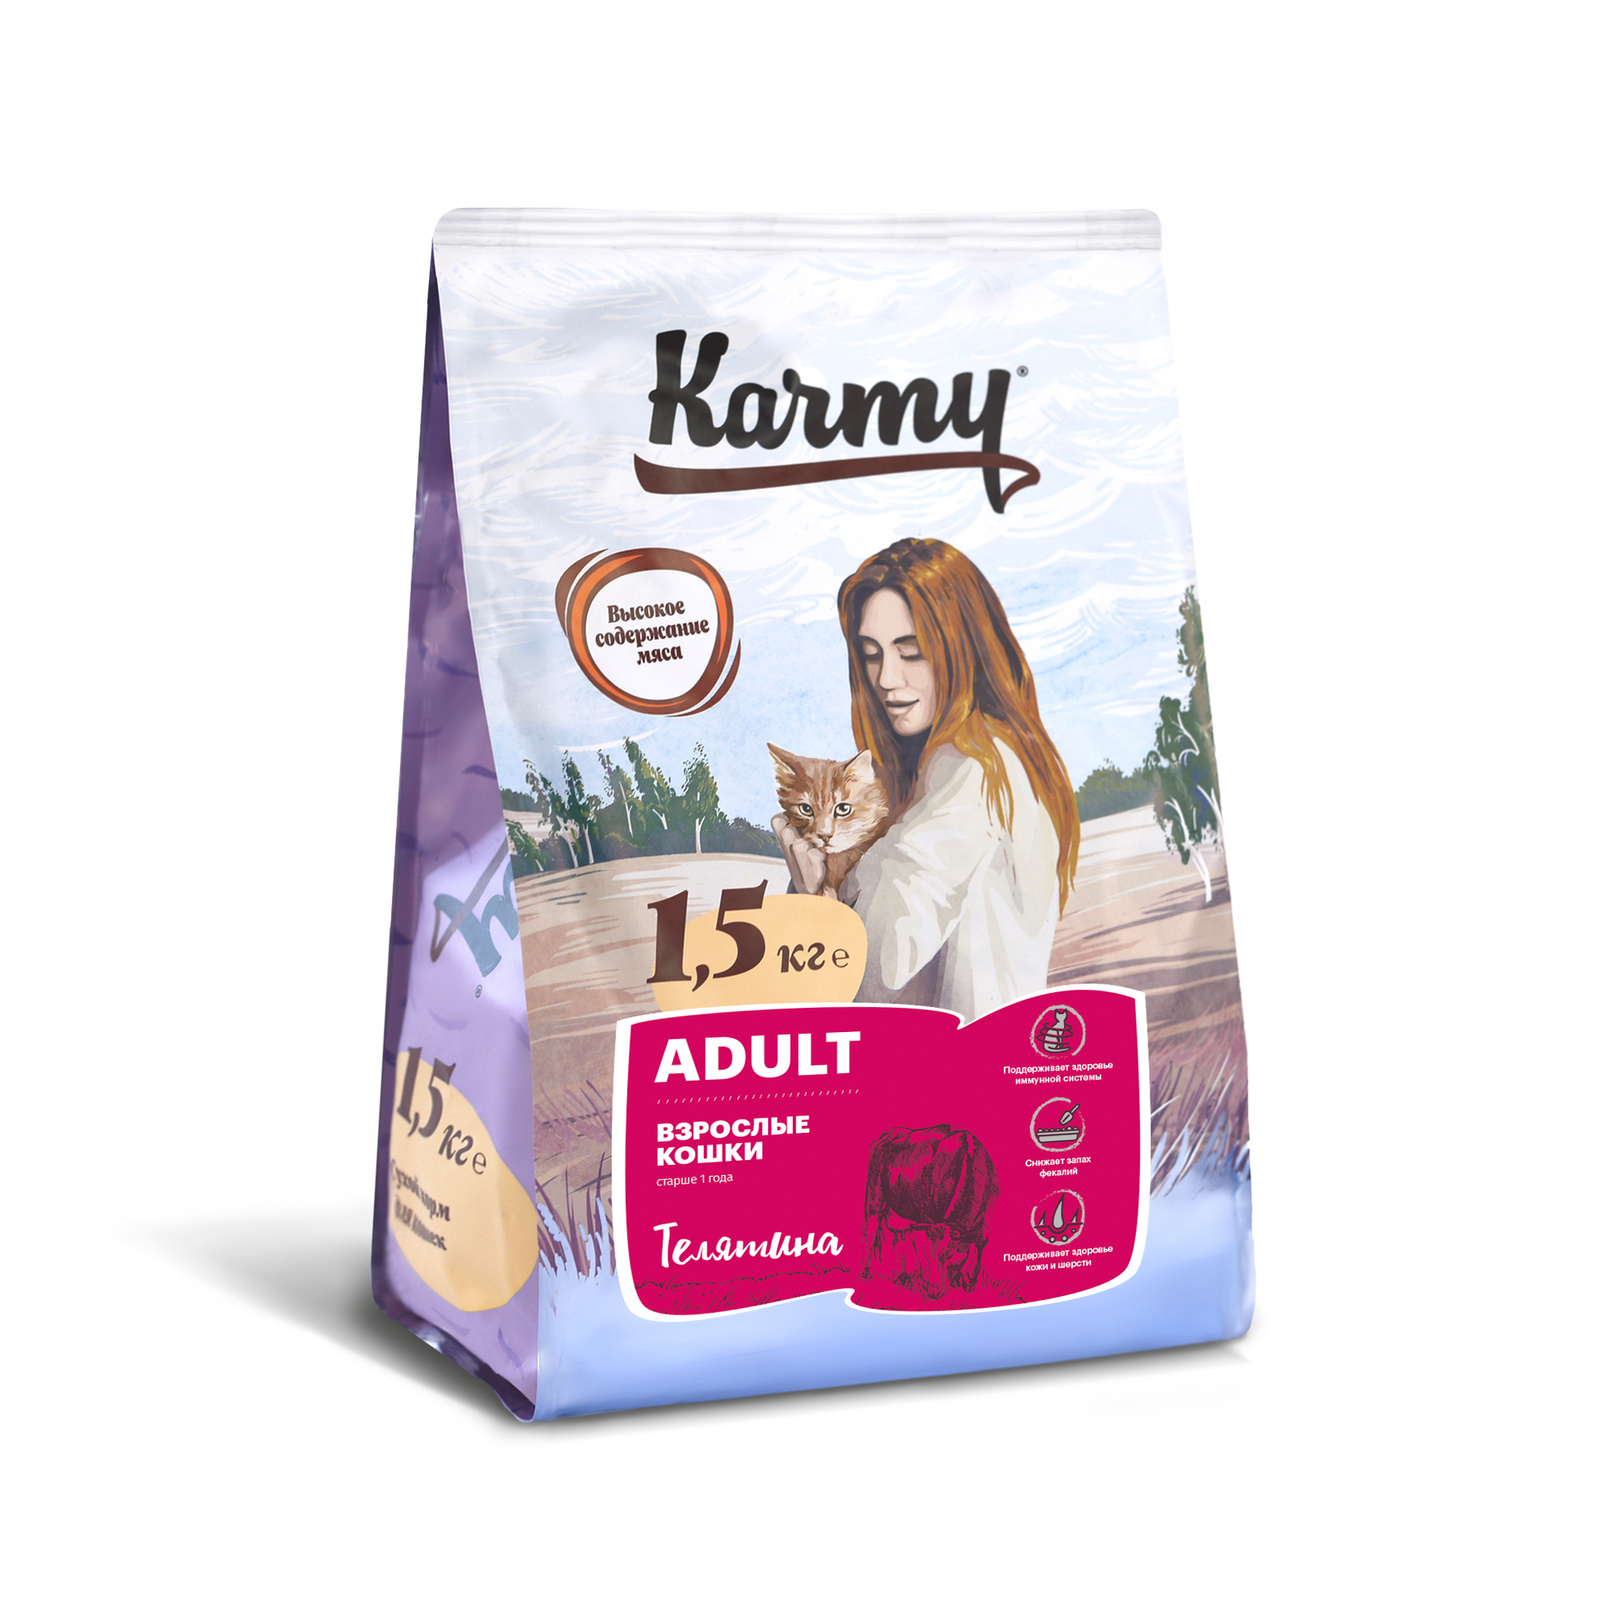 Karmy Корм Karmy сухой корм для взрослых кошек старше 1 года с телятиной (1,5 кг) karmy корм karmy сухой корм для взрослых кошек старше 1 года породы мейкун с индейкой 1 5 кг